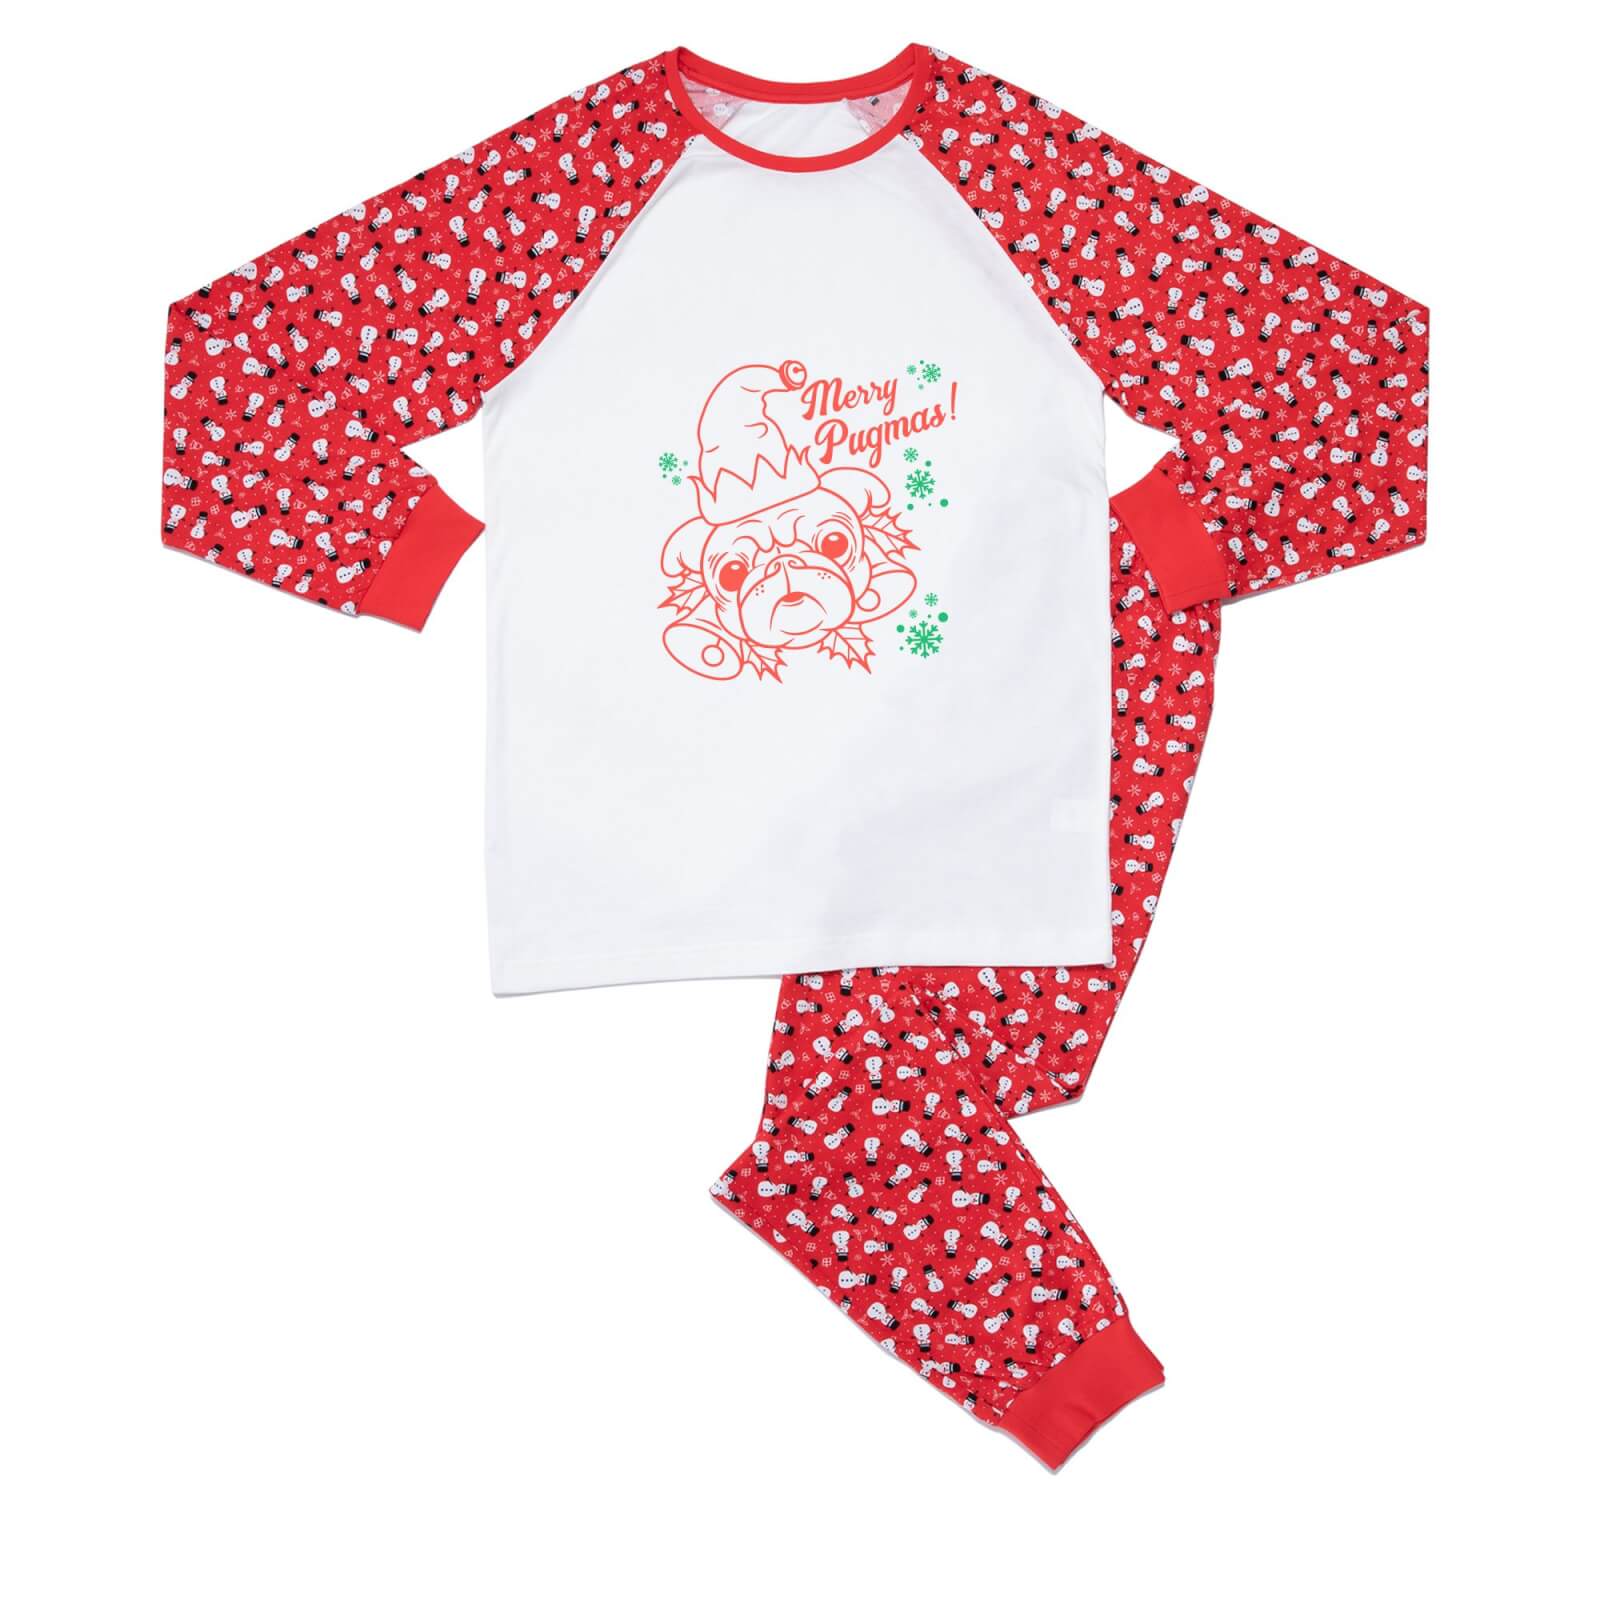 Festive Merry Pugmas Unisex Pyjama Set - Red White Pattern - XS - Red White Pattern